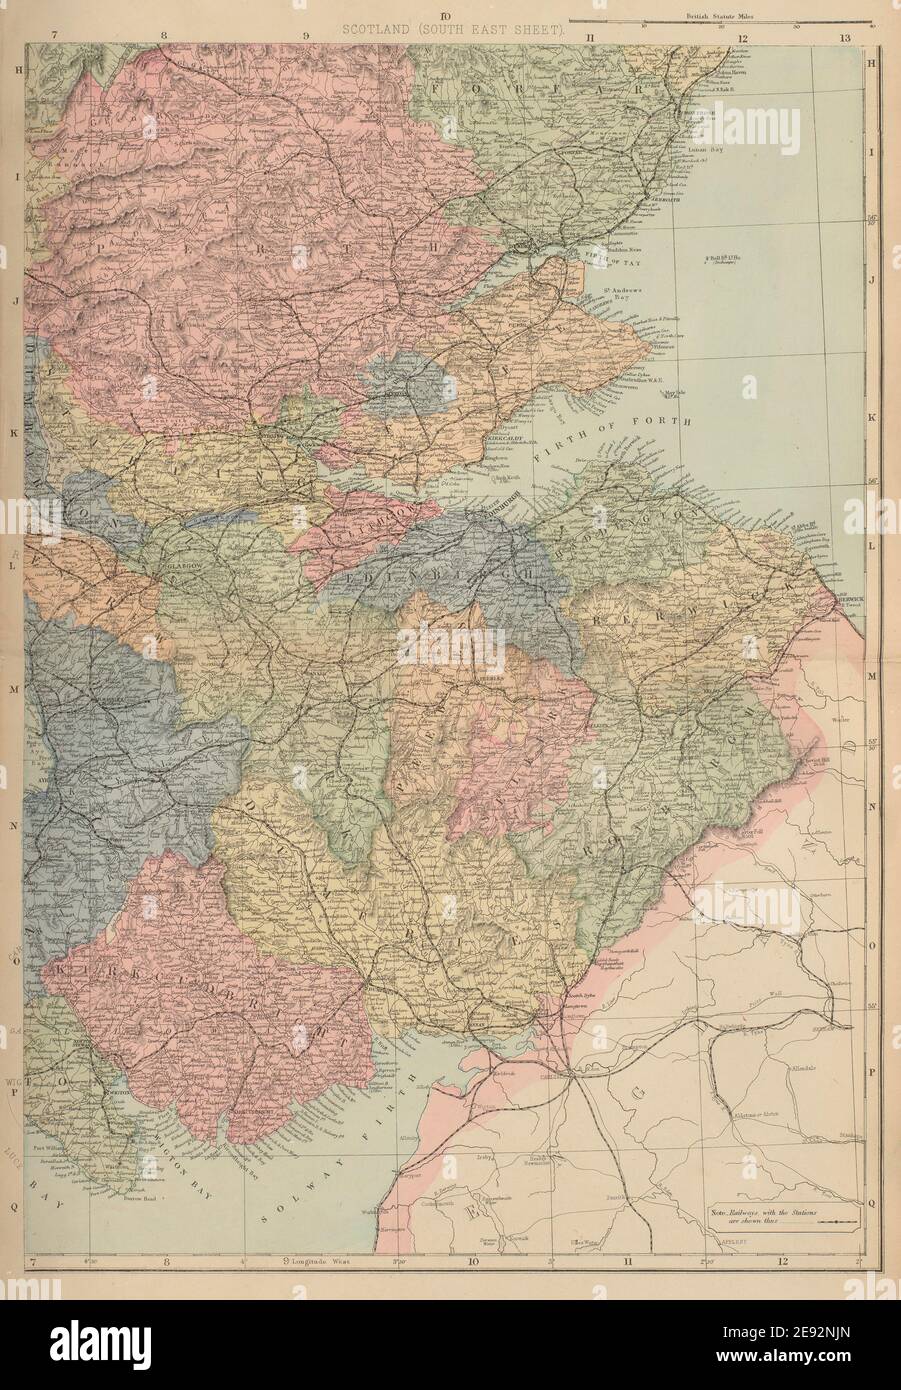 Lanark Peebles Stirling Perth Argyll Ayr Fife 1903 old map SCOTLAND CENTRAL 